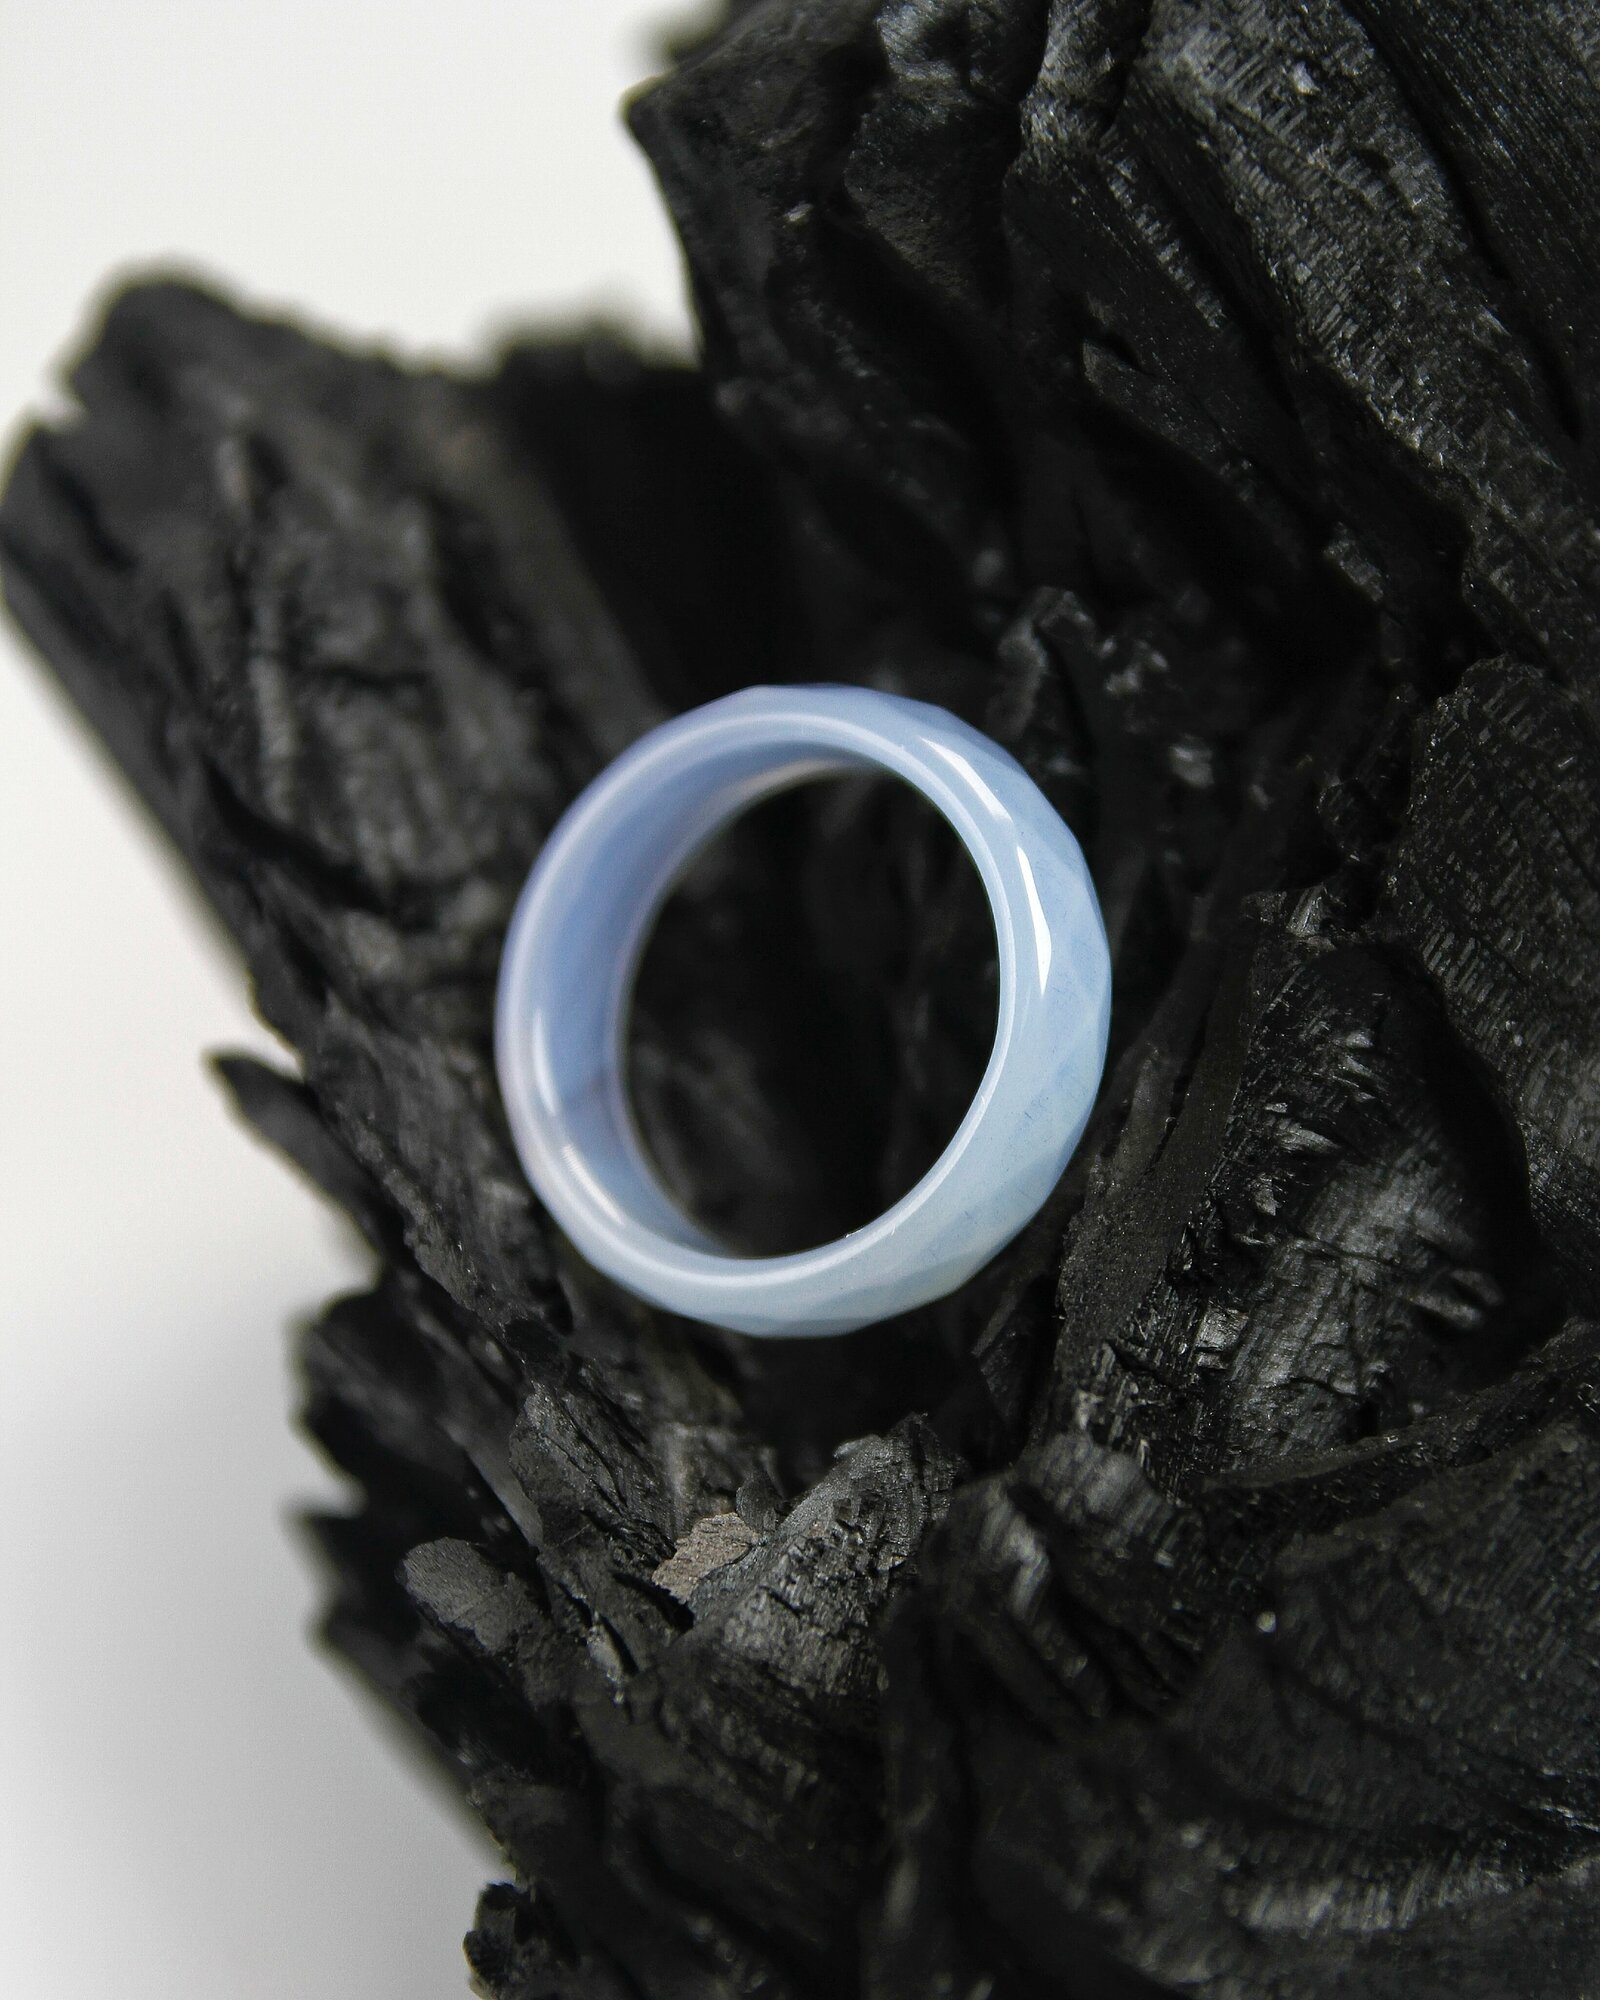 Кольцо-кулон Grow'N Up Кольцо из натурального камня Голубой агат, граненое, для душевного равновесия, размер 17-18, агат